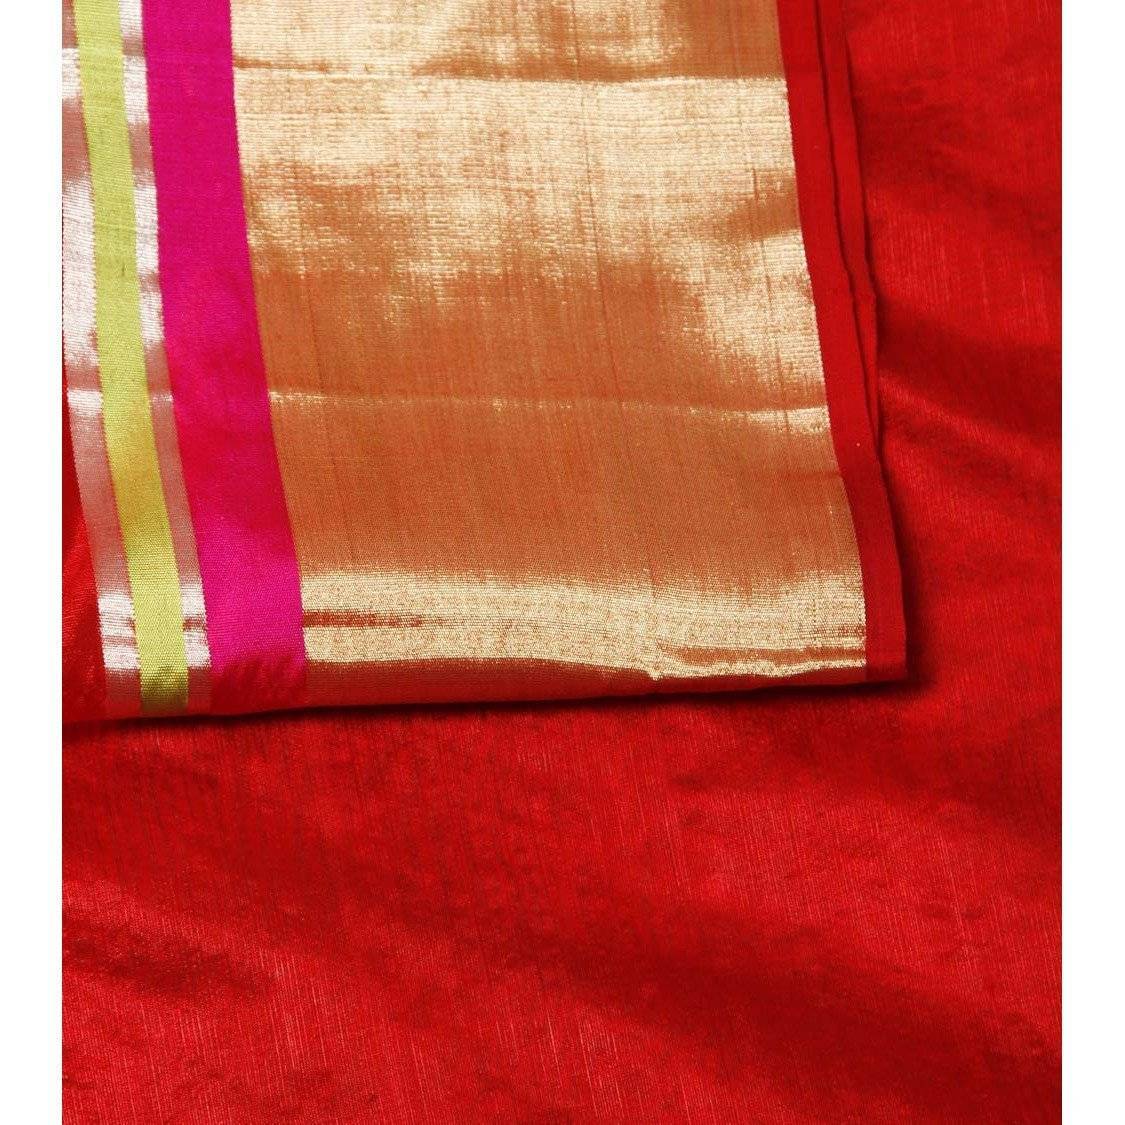 Red Silk Zari Stripes And Border & Skirt Pattern Chanderi Saree